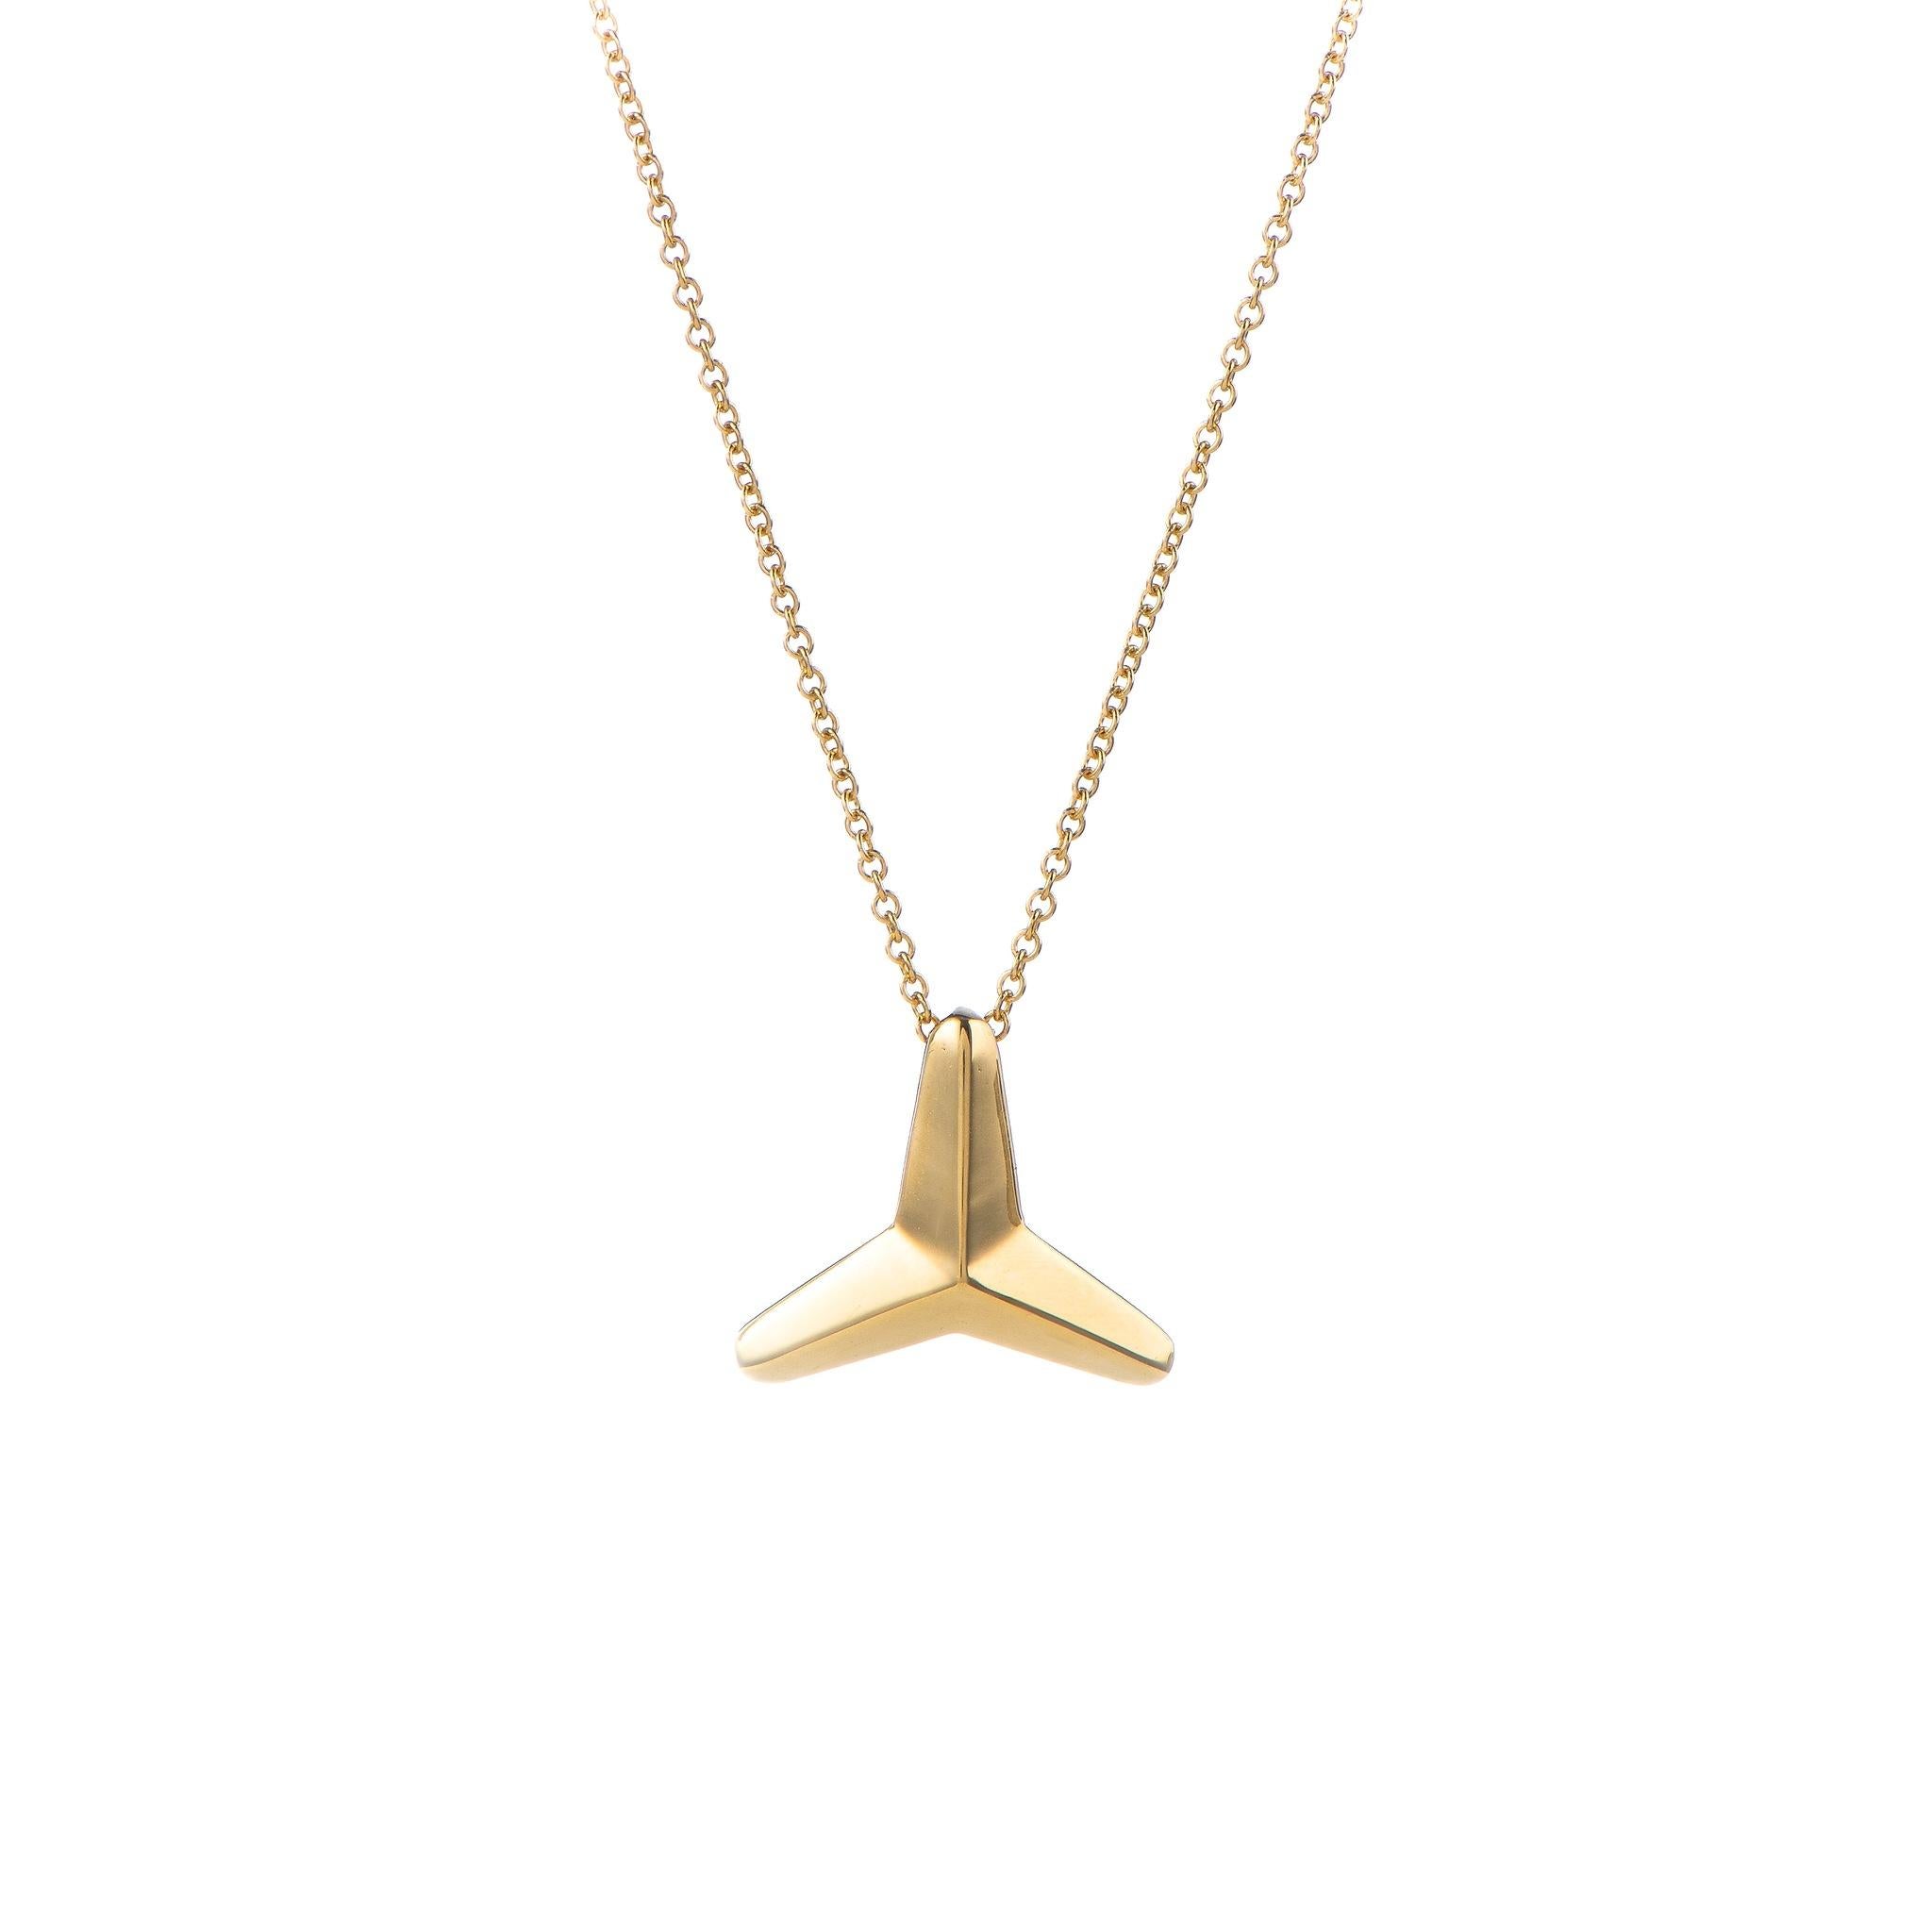 Maria Kotsoni Contemporary 18k Gold Three Pointed Star Diamond Pendant Necklace In New Condition For Sale In Nicosia, CY